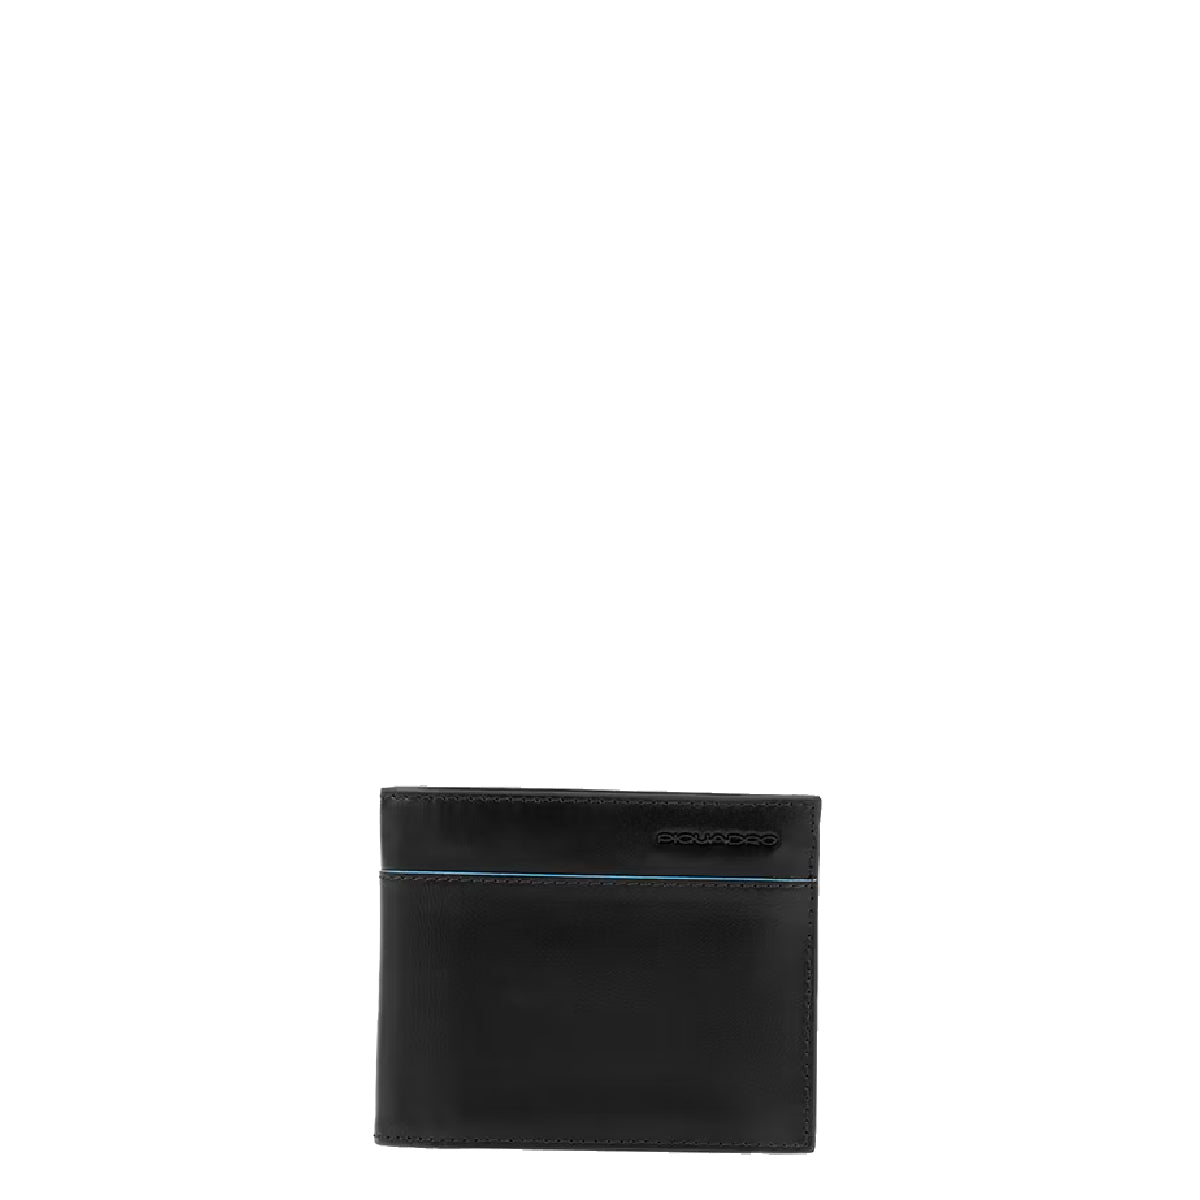 Piquadro - Portafoglio RFID con Porta ID B2 Revamp - PU3891B2VR - NERO